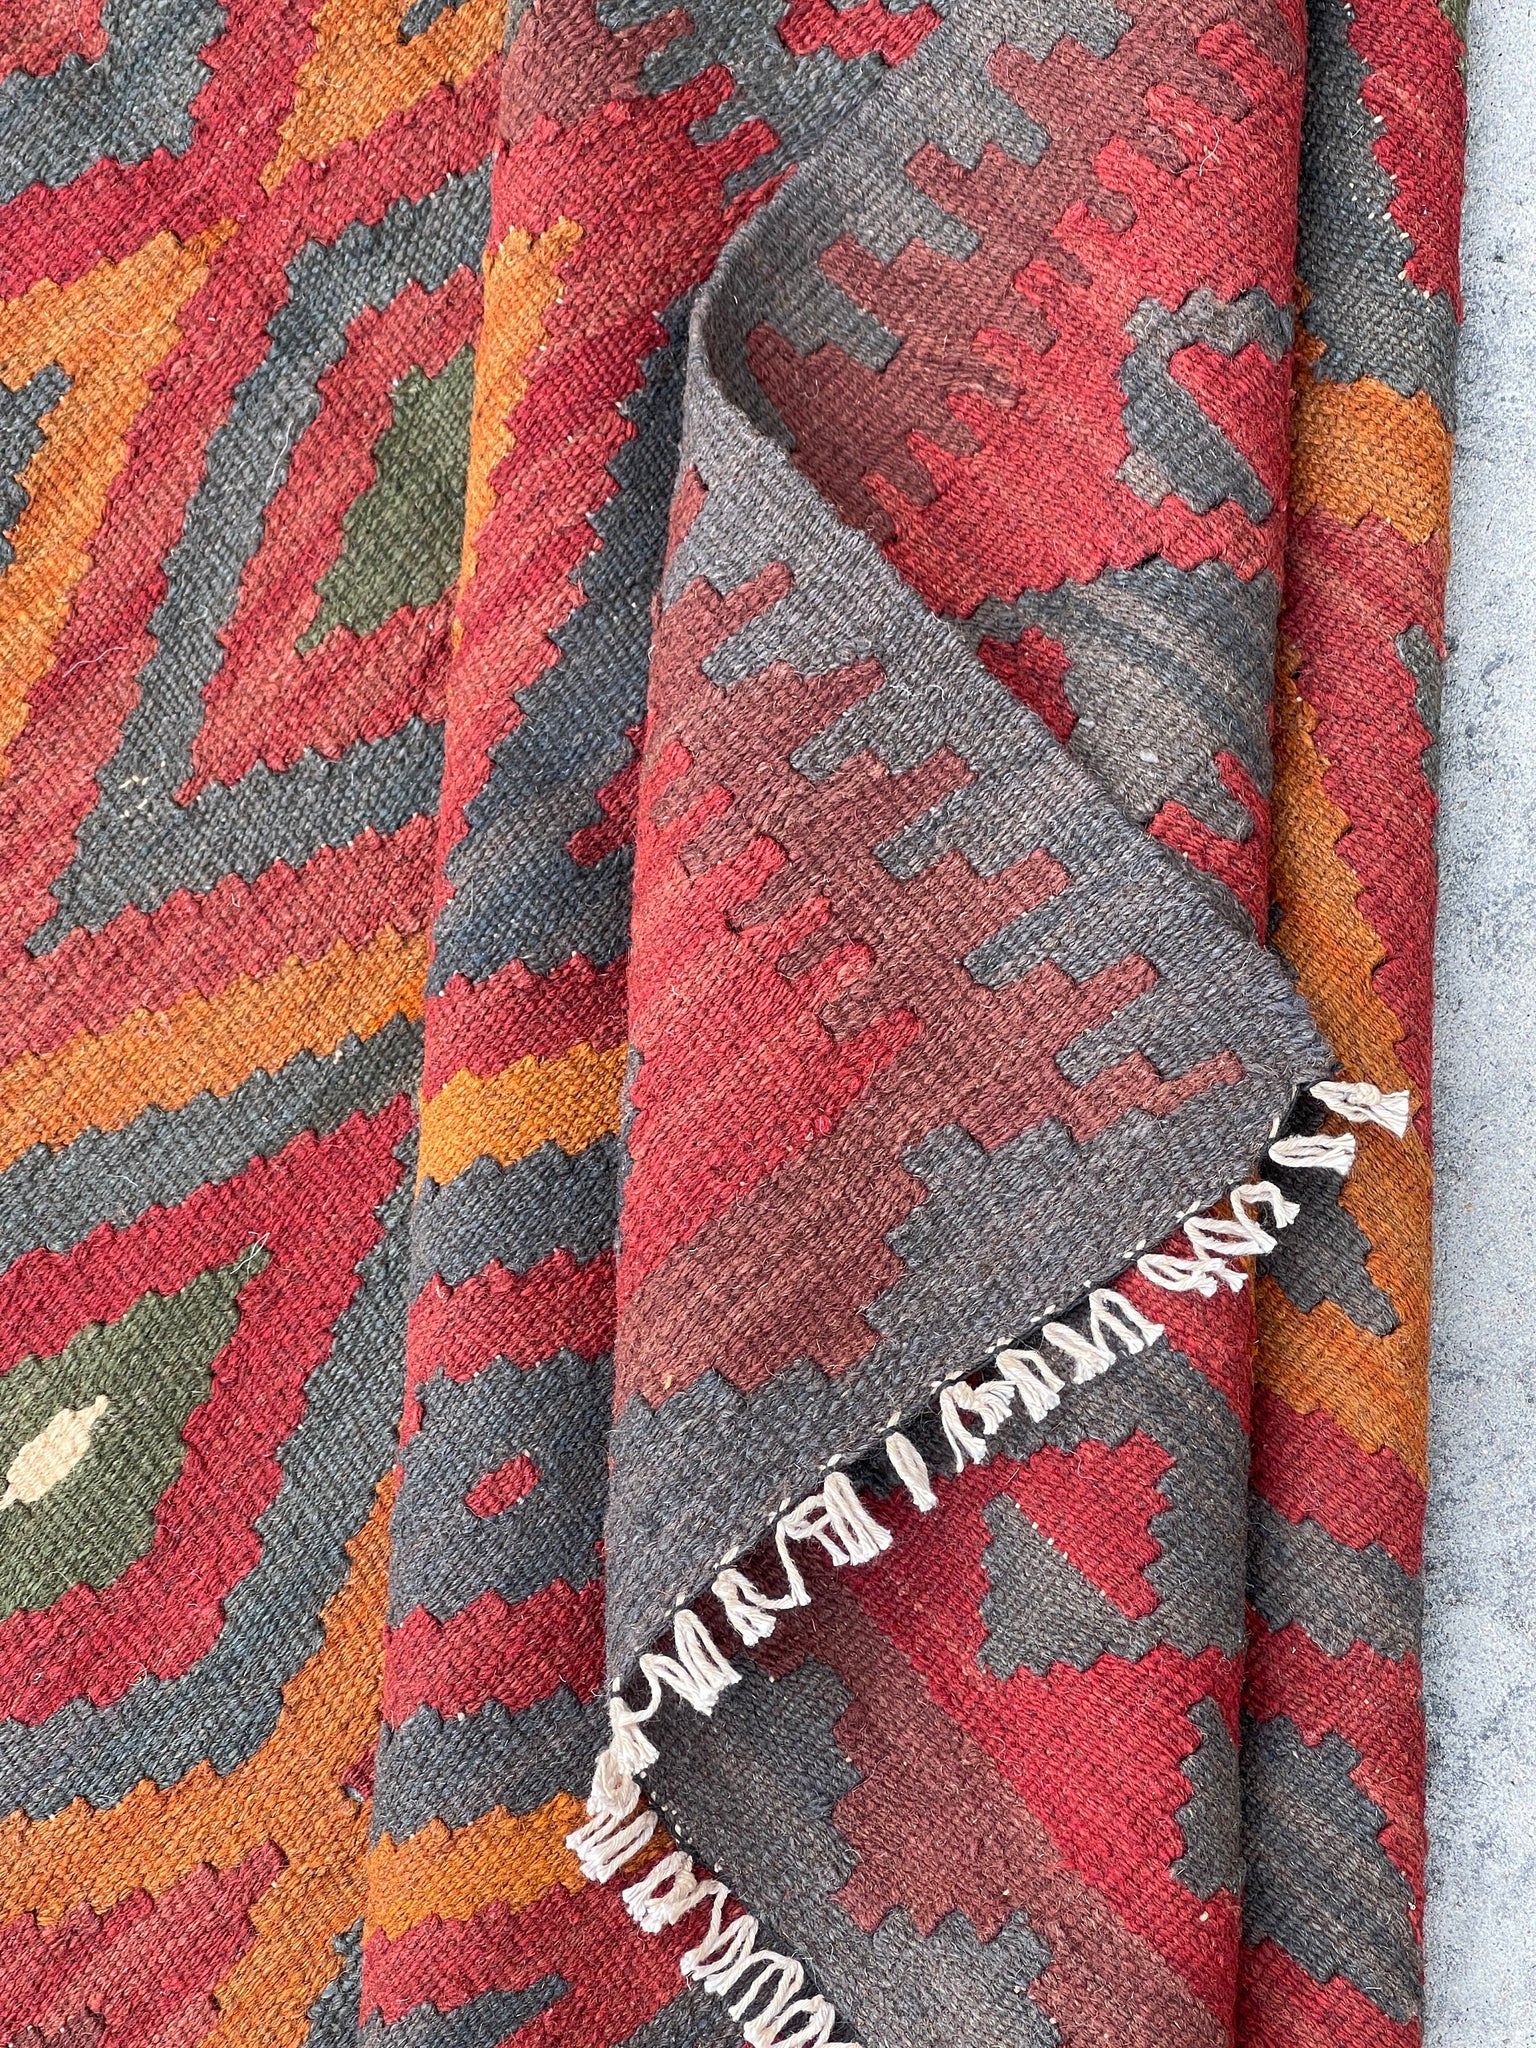 5x8 (150x245) Handmade Afghan Kilim Rug | Red Indigo Orange Pine Green Brown | Hand Knotted Tribal Nomadic Turkish Moroccan Kilim Wool